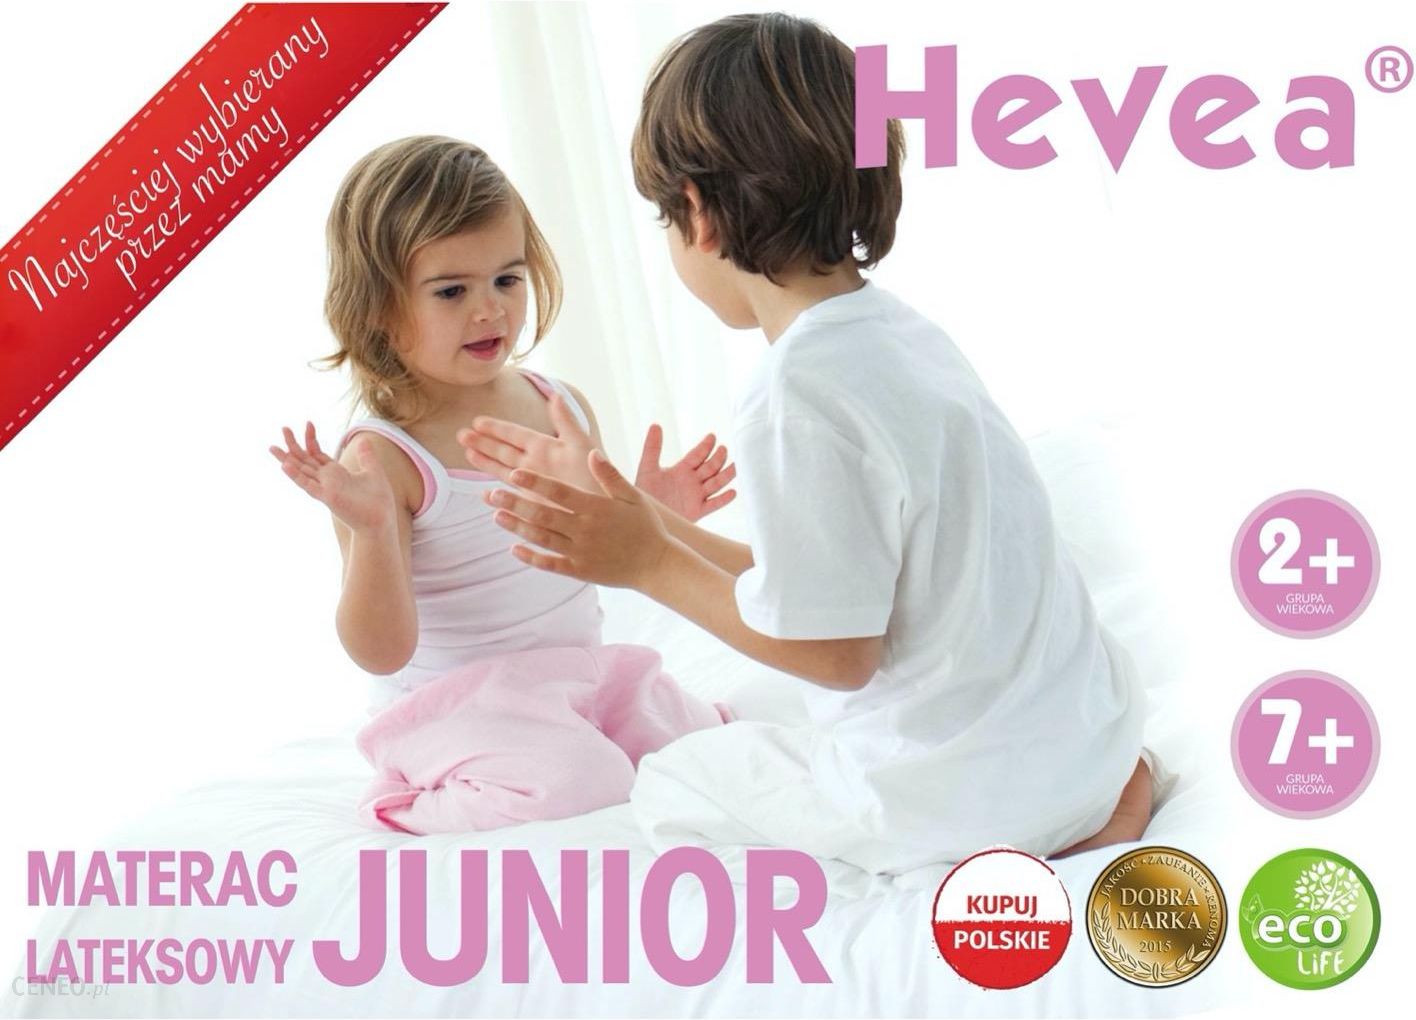 Hevea Materac lateksowy Junior 160x70